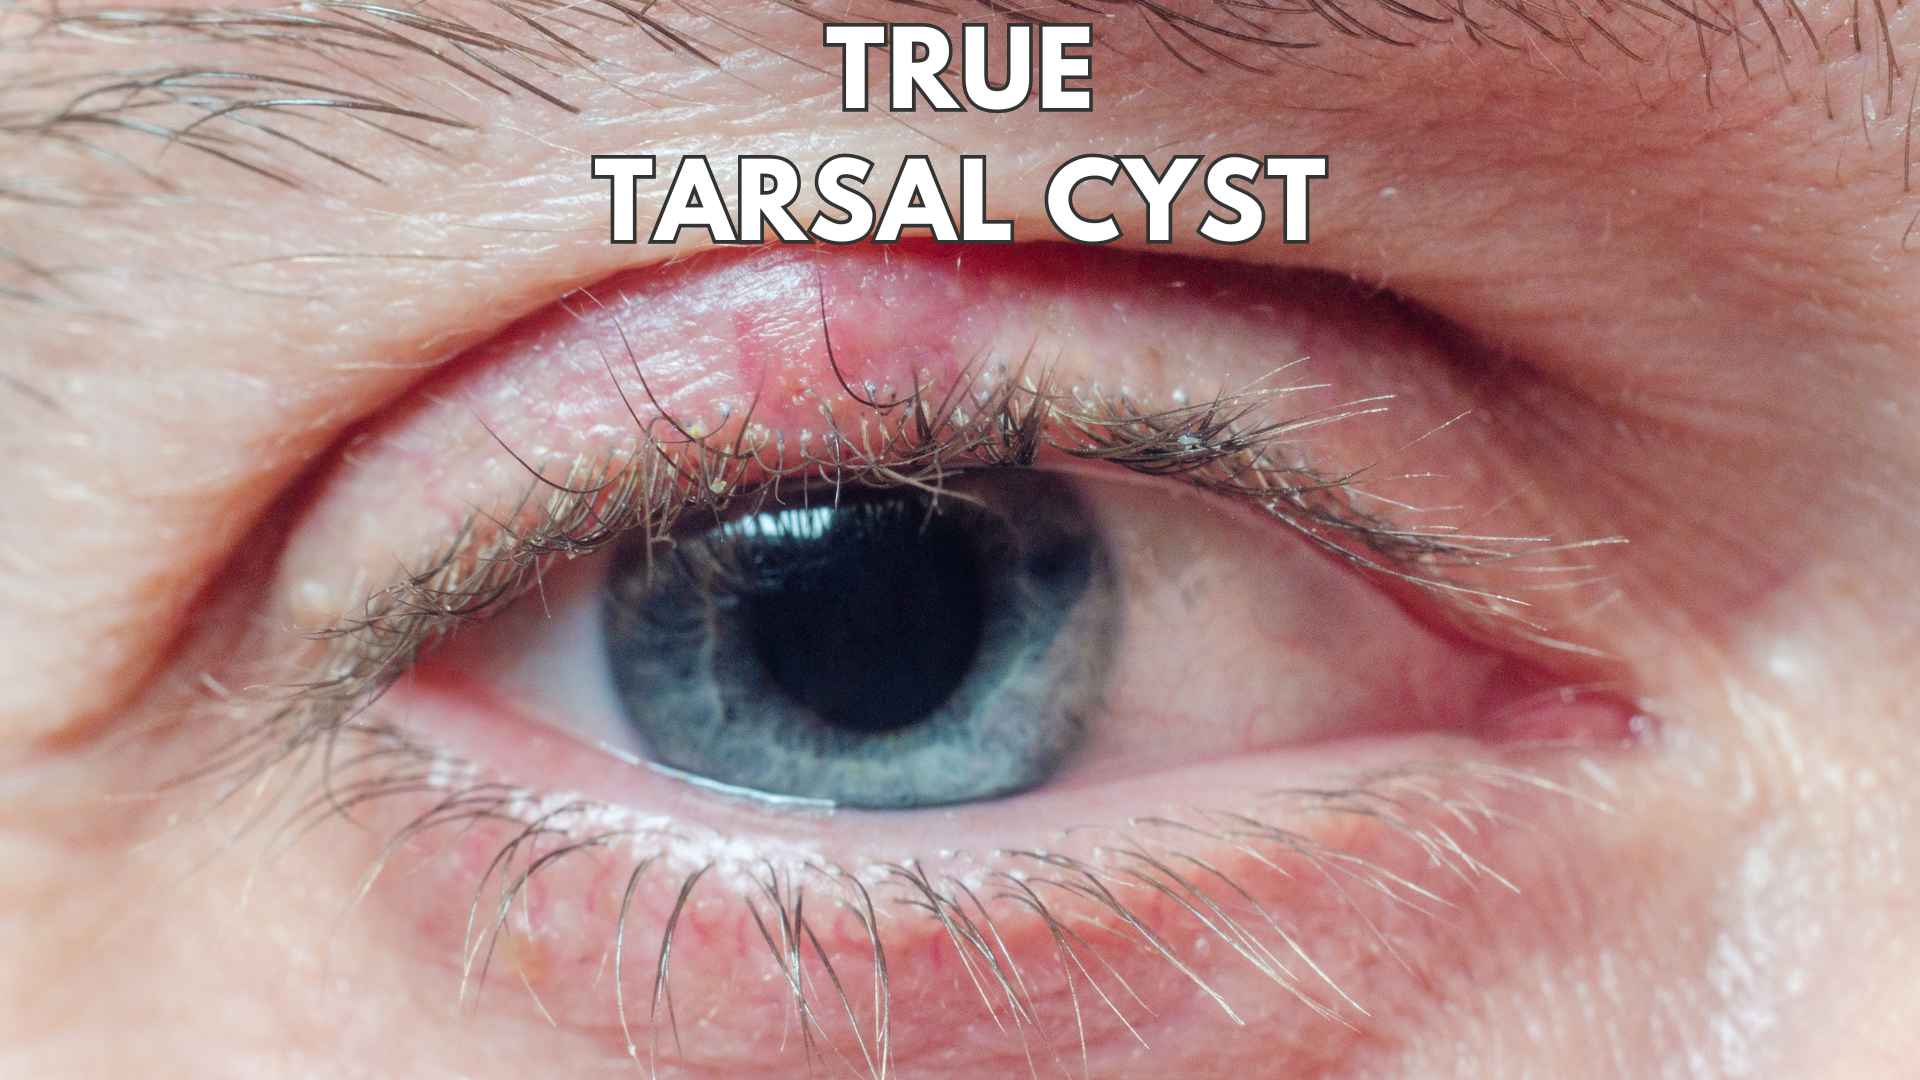 True tarsal cyst - not a chalazion - Dr Anthony Maloof